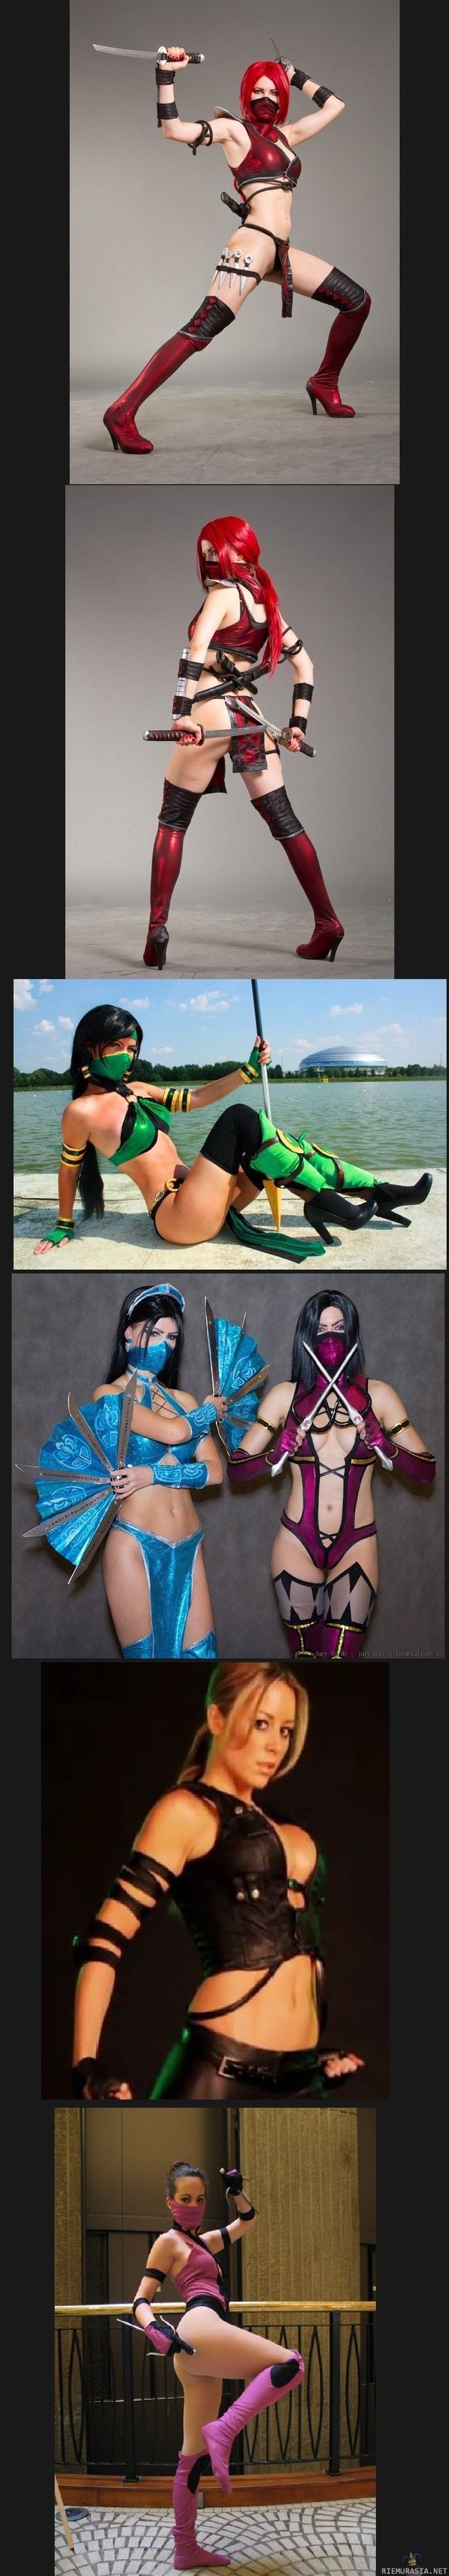 Mortal Kombat - Female cosplay